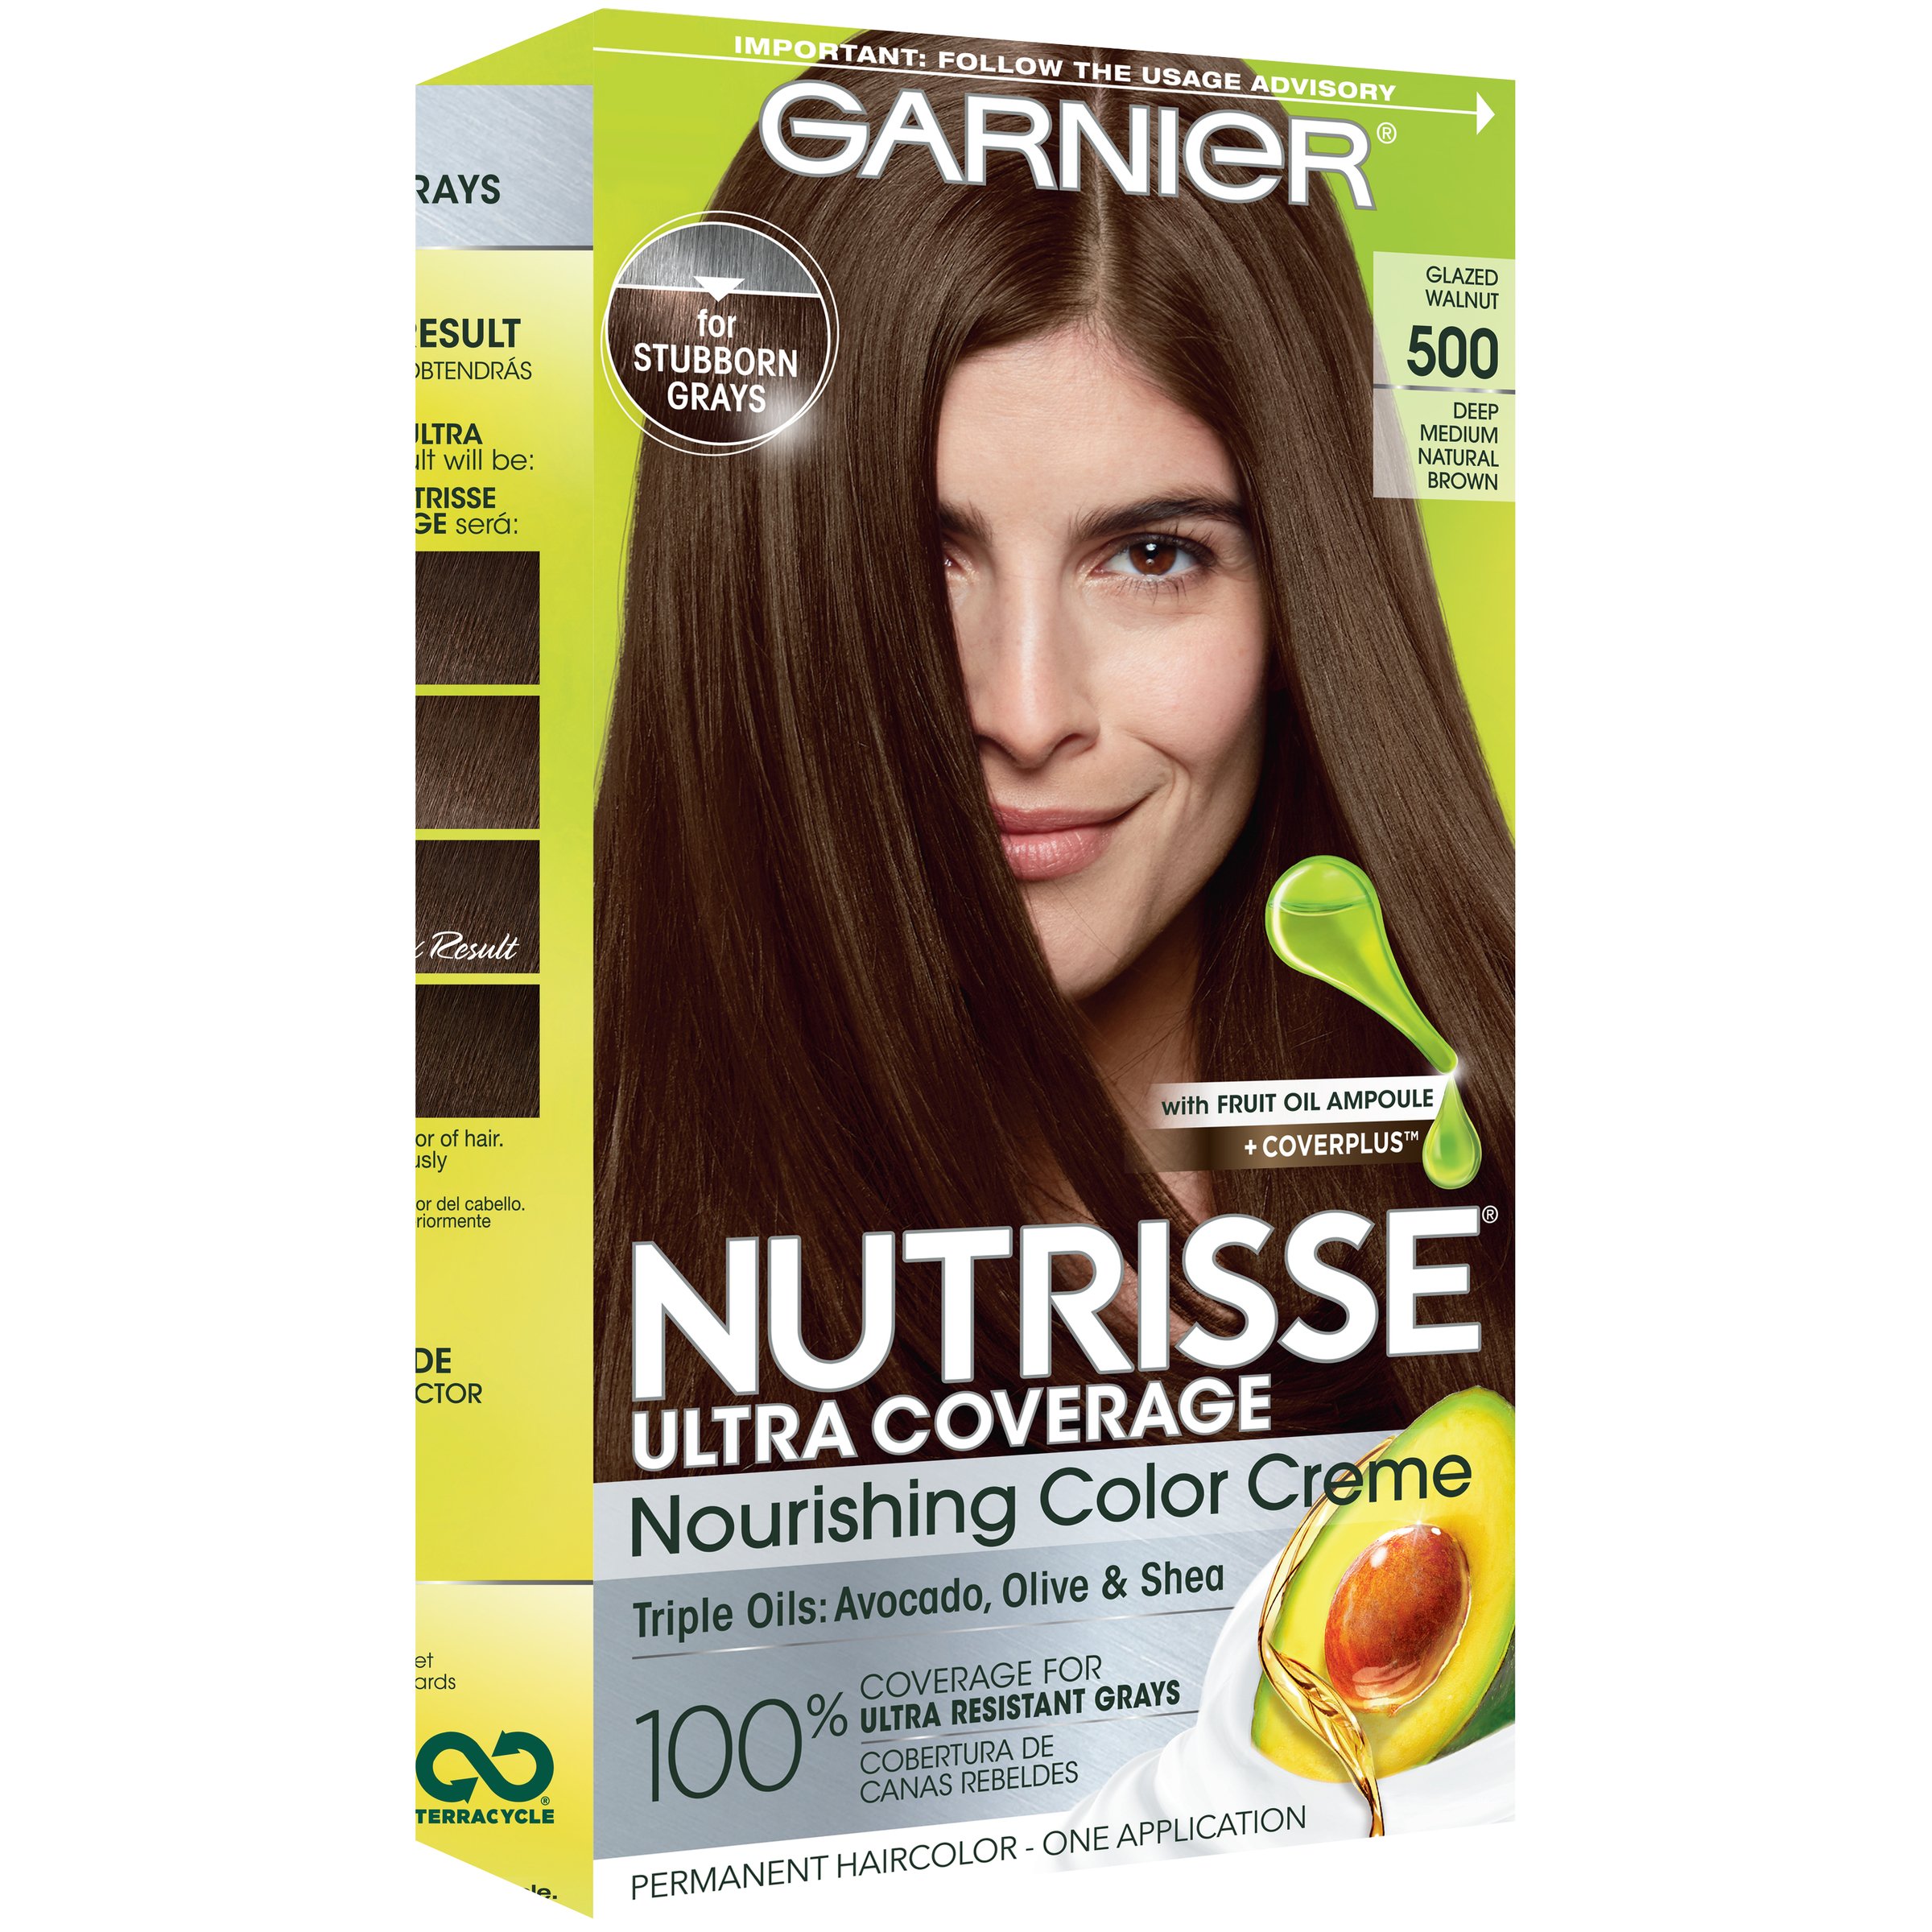 Garnier Nutrisse Ultra Coverage Nourishing Permanent Hair Color Creme for  Stubborn Gray Coverage Deep Medium Natural Brown (Glazed Walnut) 500 - Shop Hair  Color at H-E-B